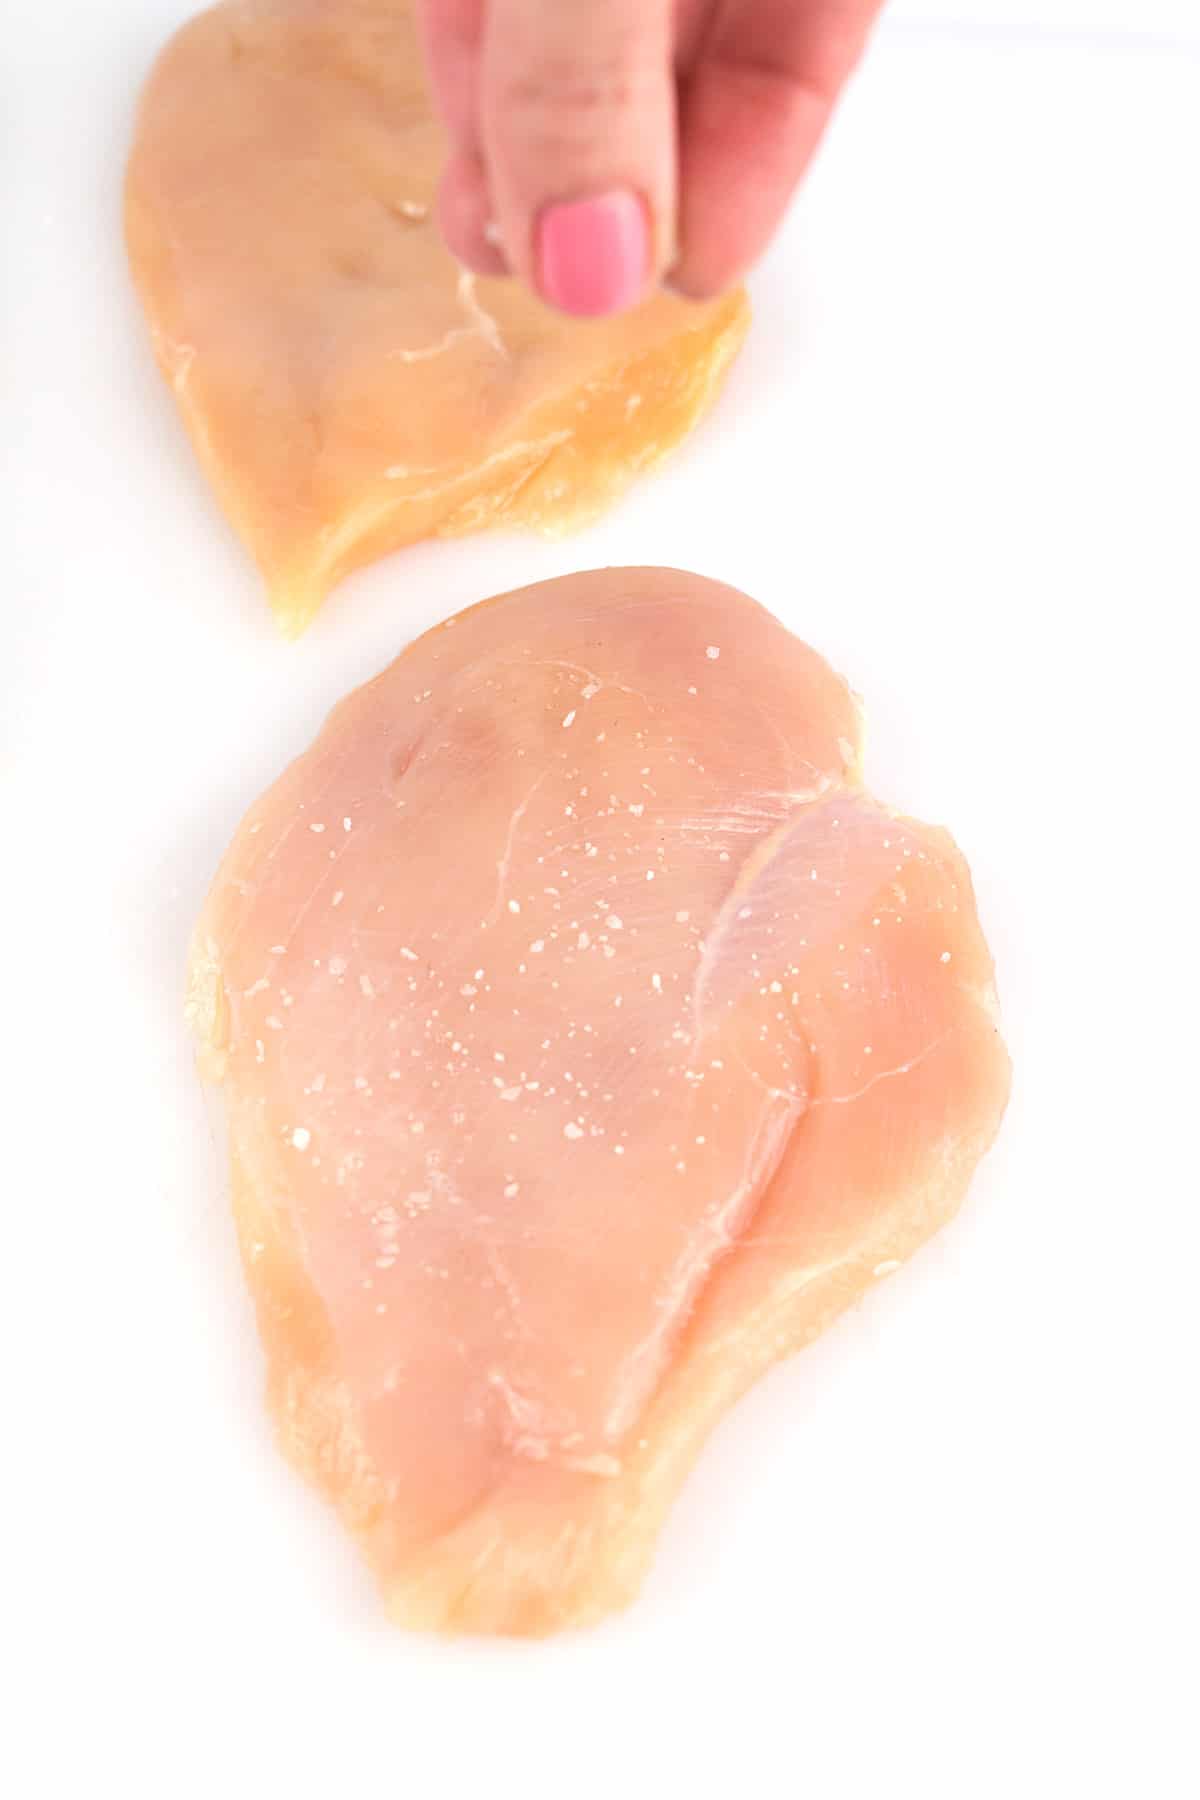 Hand sprinkling kosher salt onto a raw chicken breast on a white cutting board.